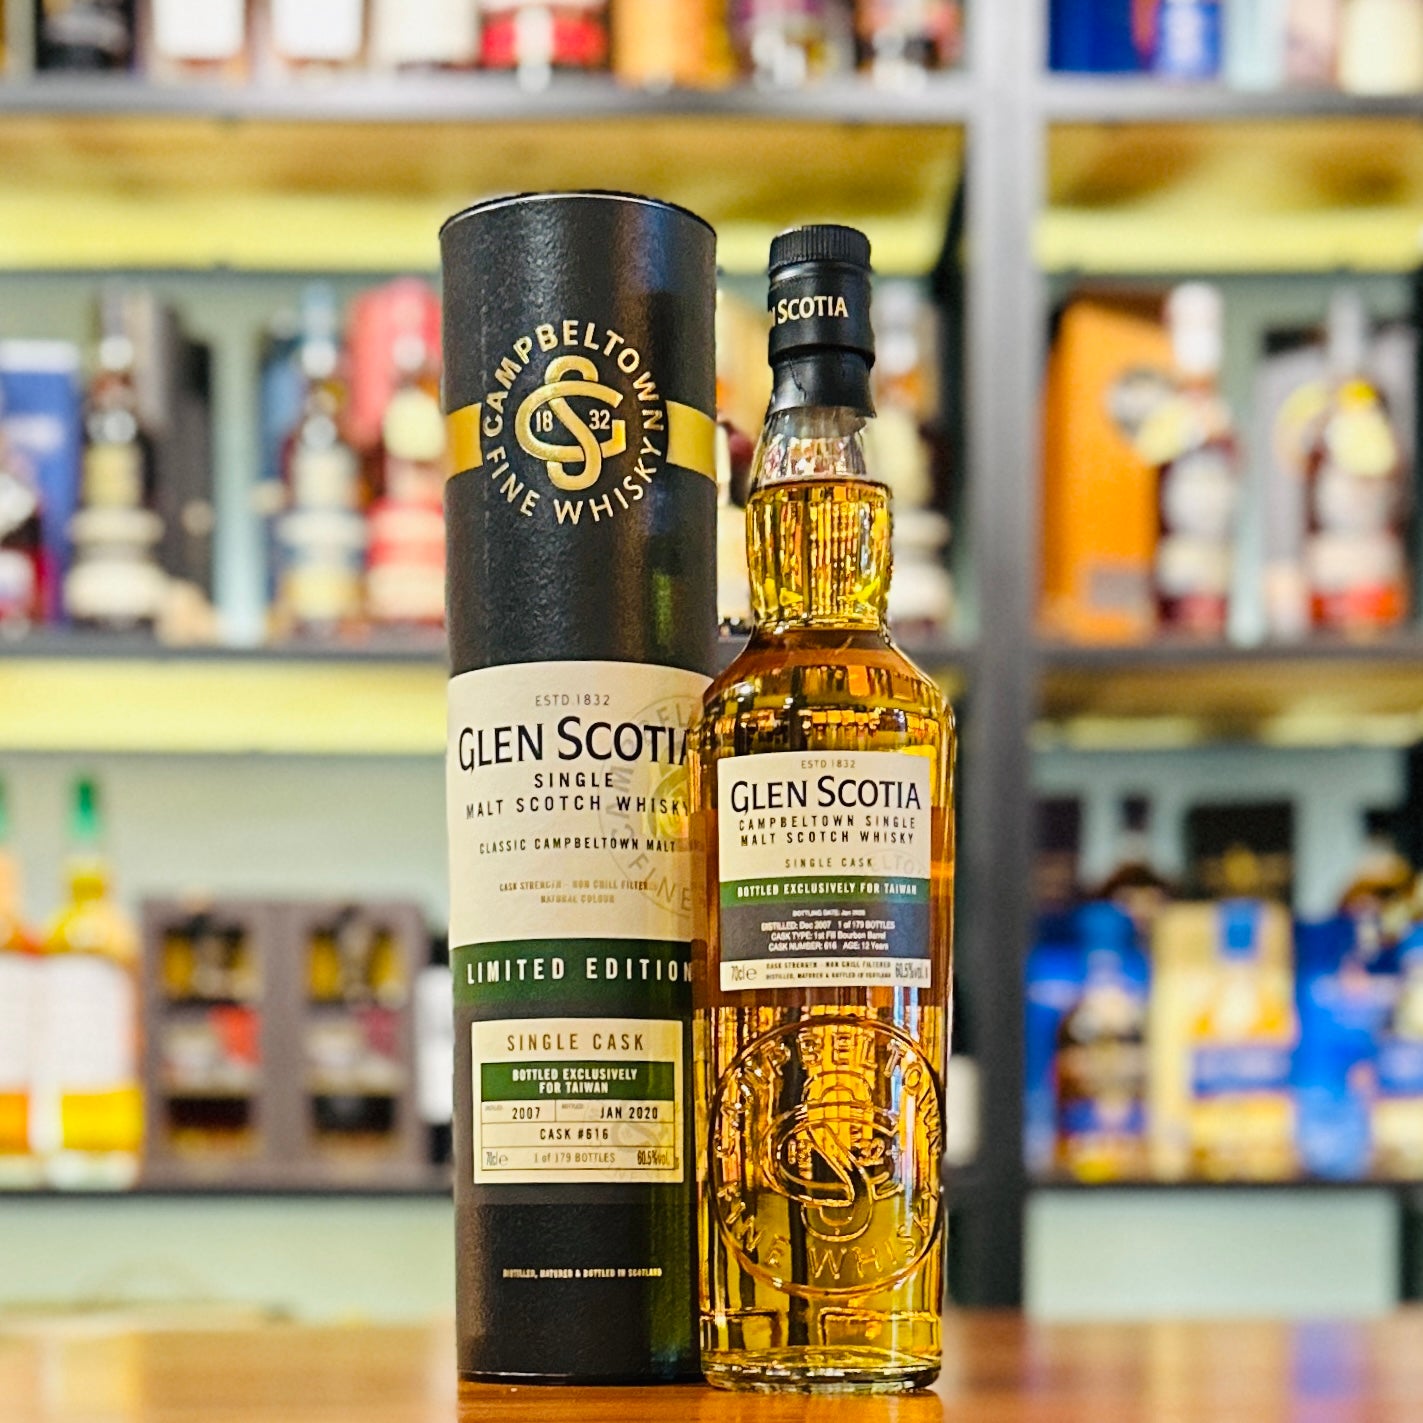 Glen Scotia 12 Year Old 2007-2020 First-fill Bourbon Barrel #616 Single Malt Scotch Whisky